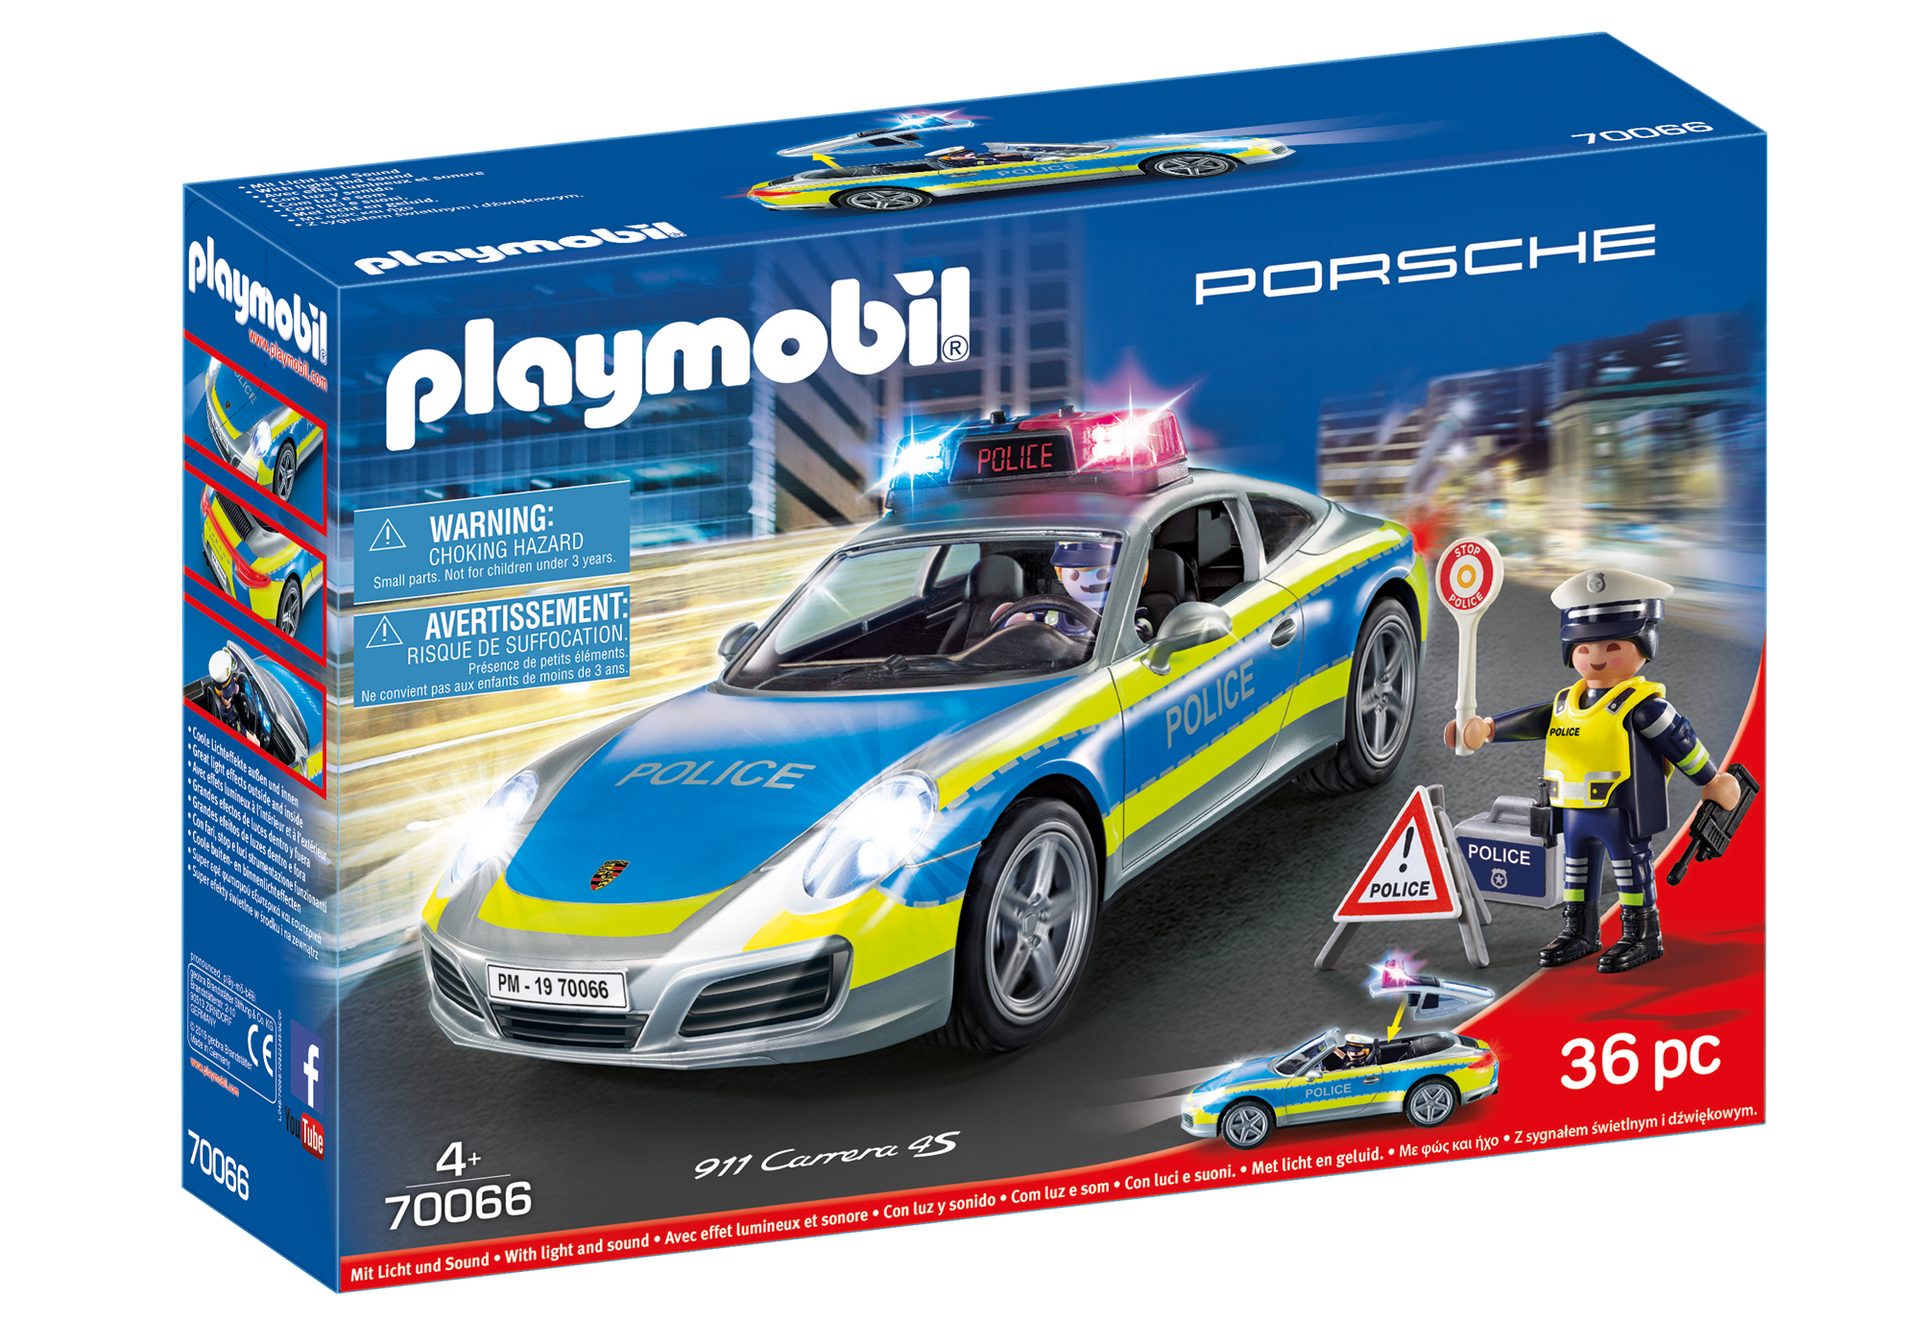 Playmobil - Porsche 911 Carrera 4S Police - White (70066)